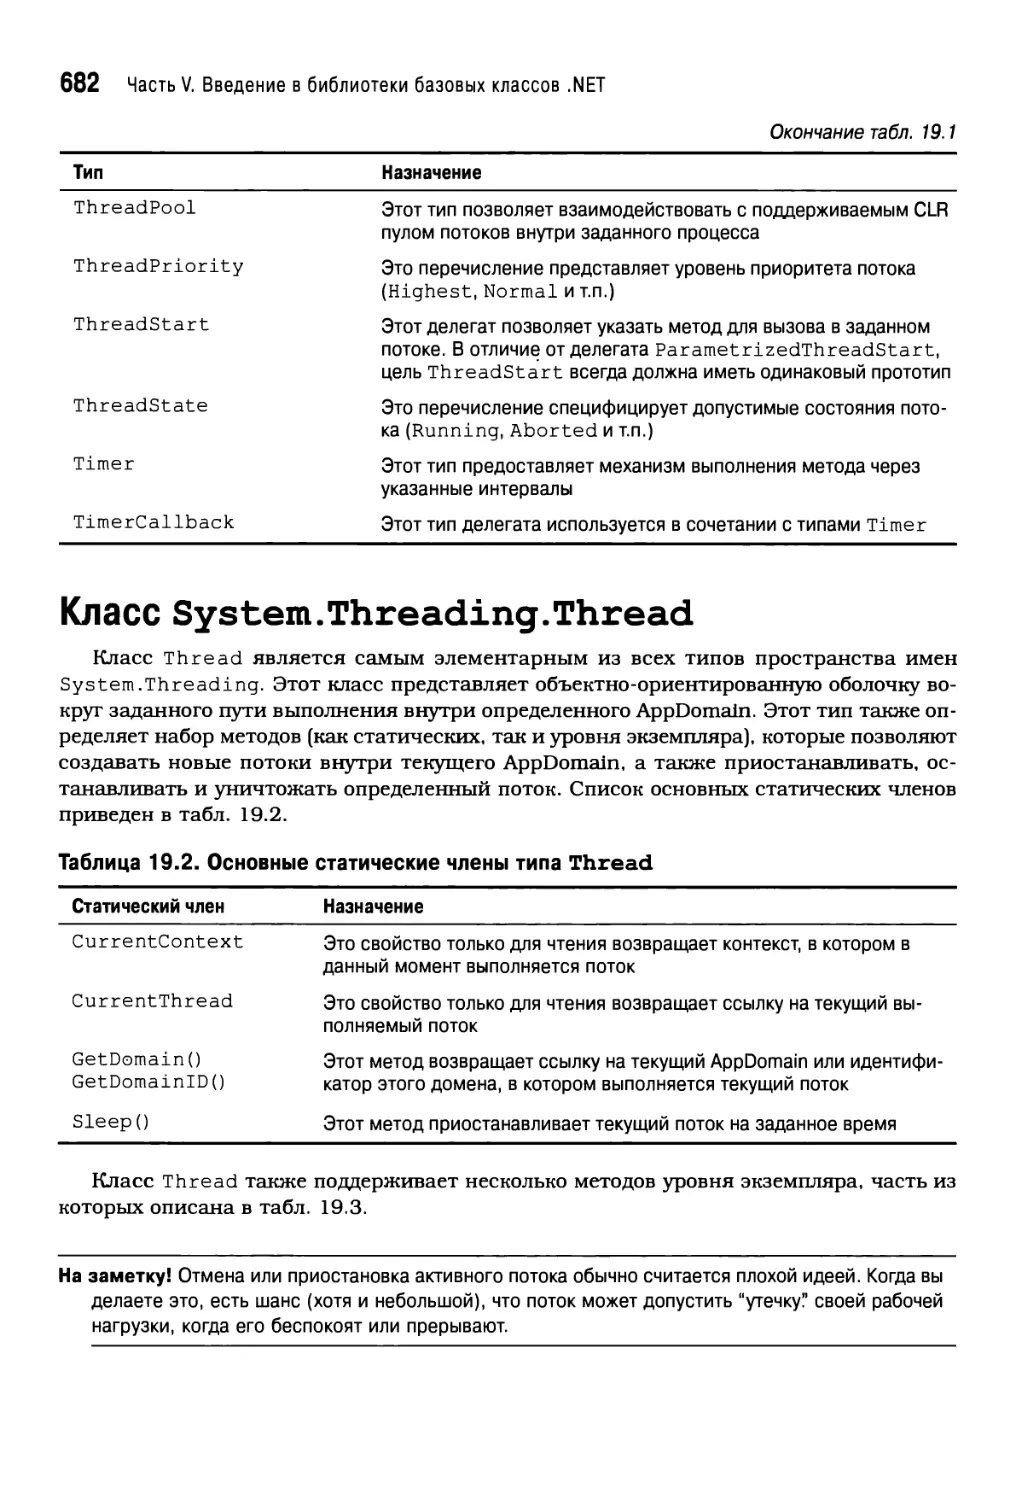 Класс System.Threading.Thread